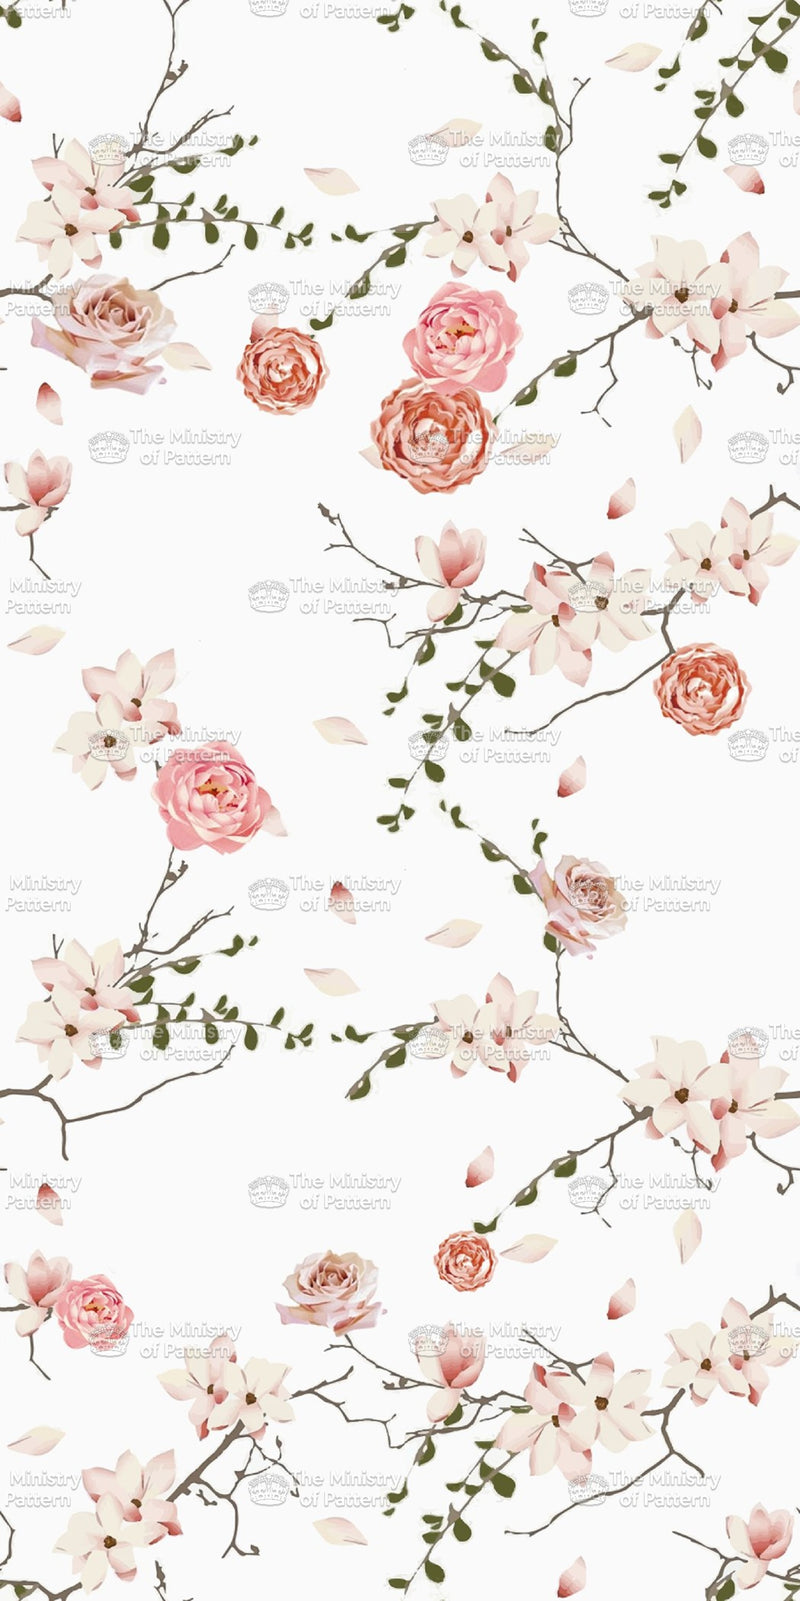 Romantic Rose Floral - The Ministry Of Pattern - Patternsforlicensing-textilestudio-printdesignstudio-trendinspiration-digitalprintdesign-exclusivepattern-printtrends-patternoftheweek